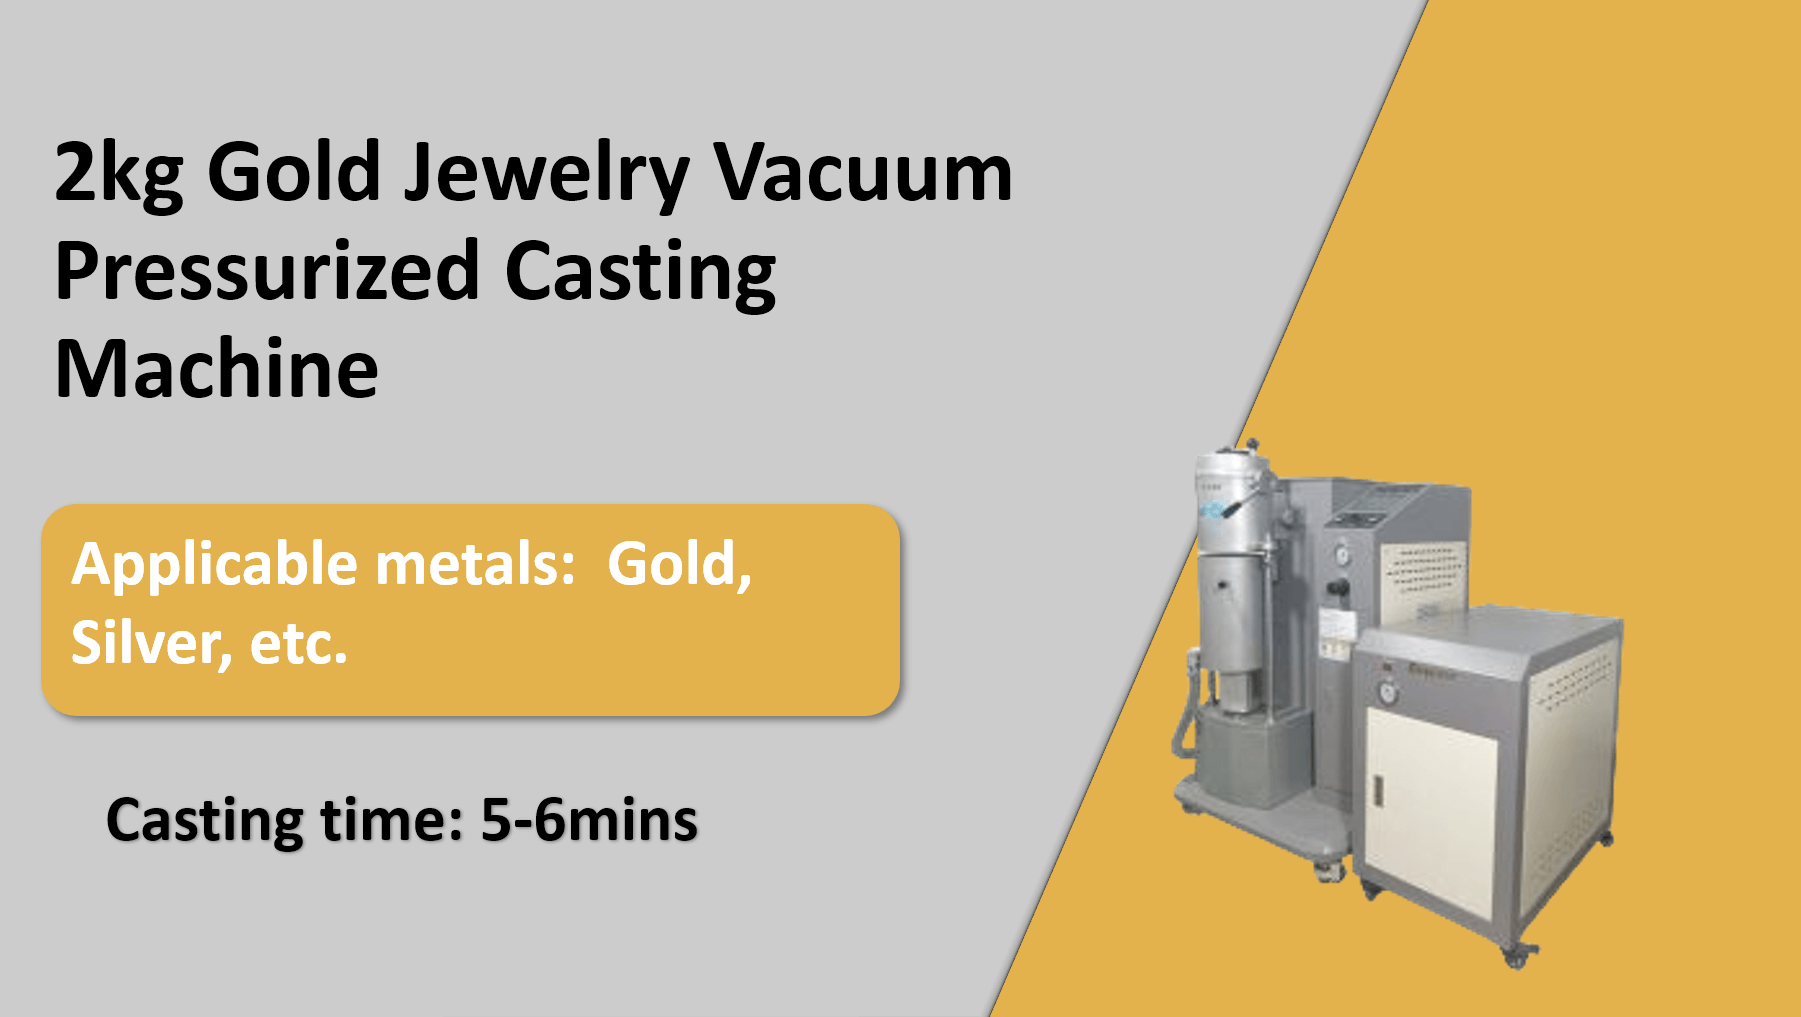 2kg Gold Jewelry Vacuum Pressurized Casting Machine